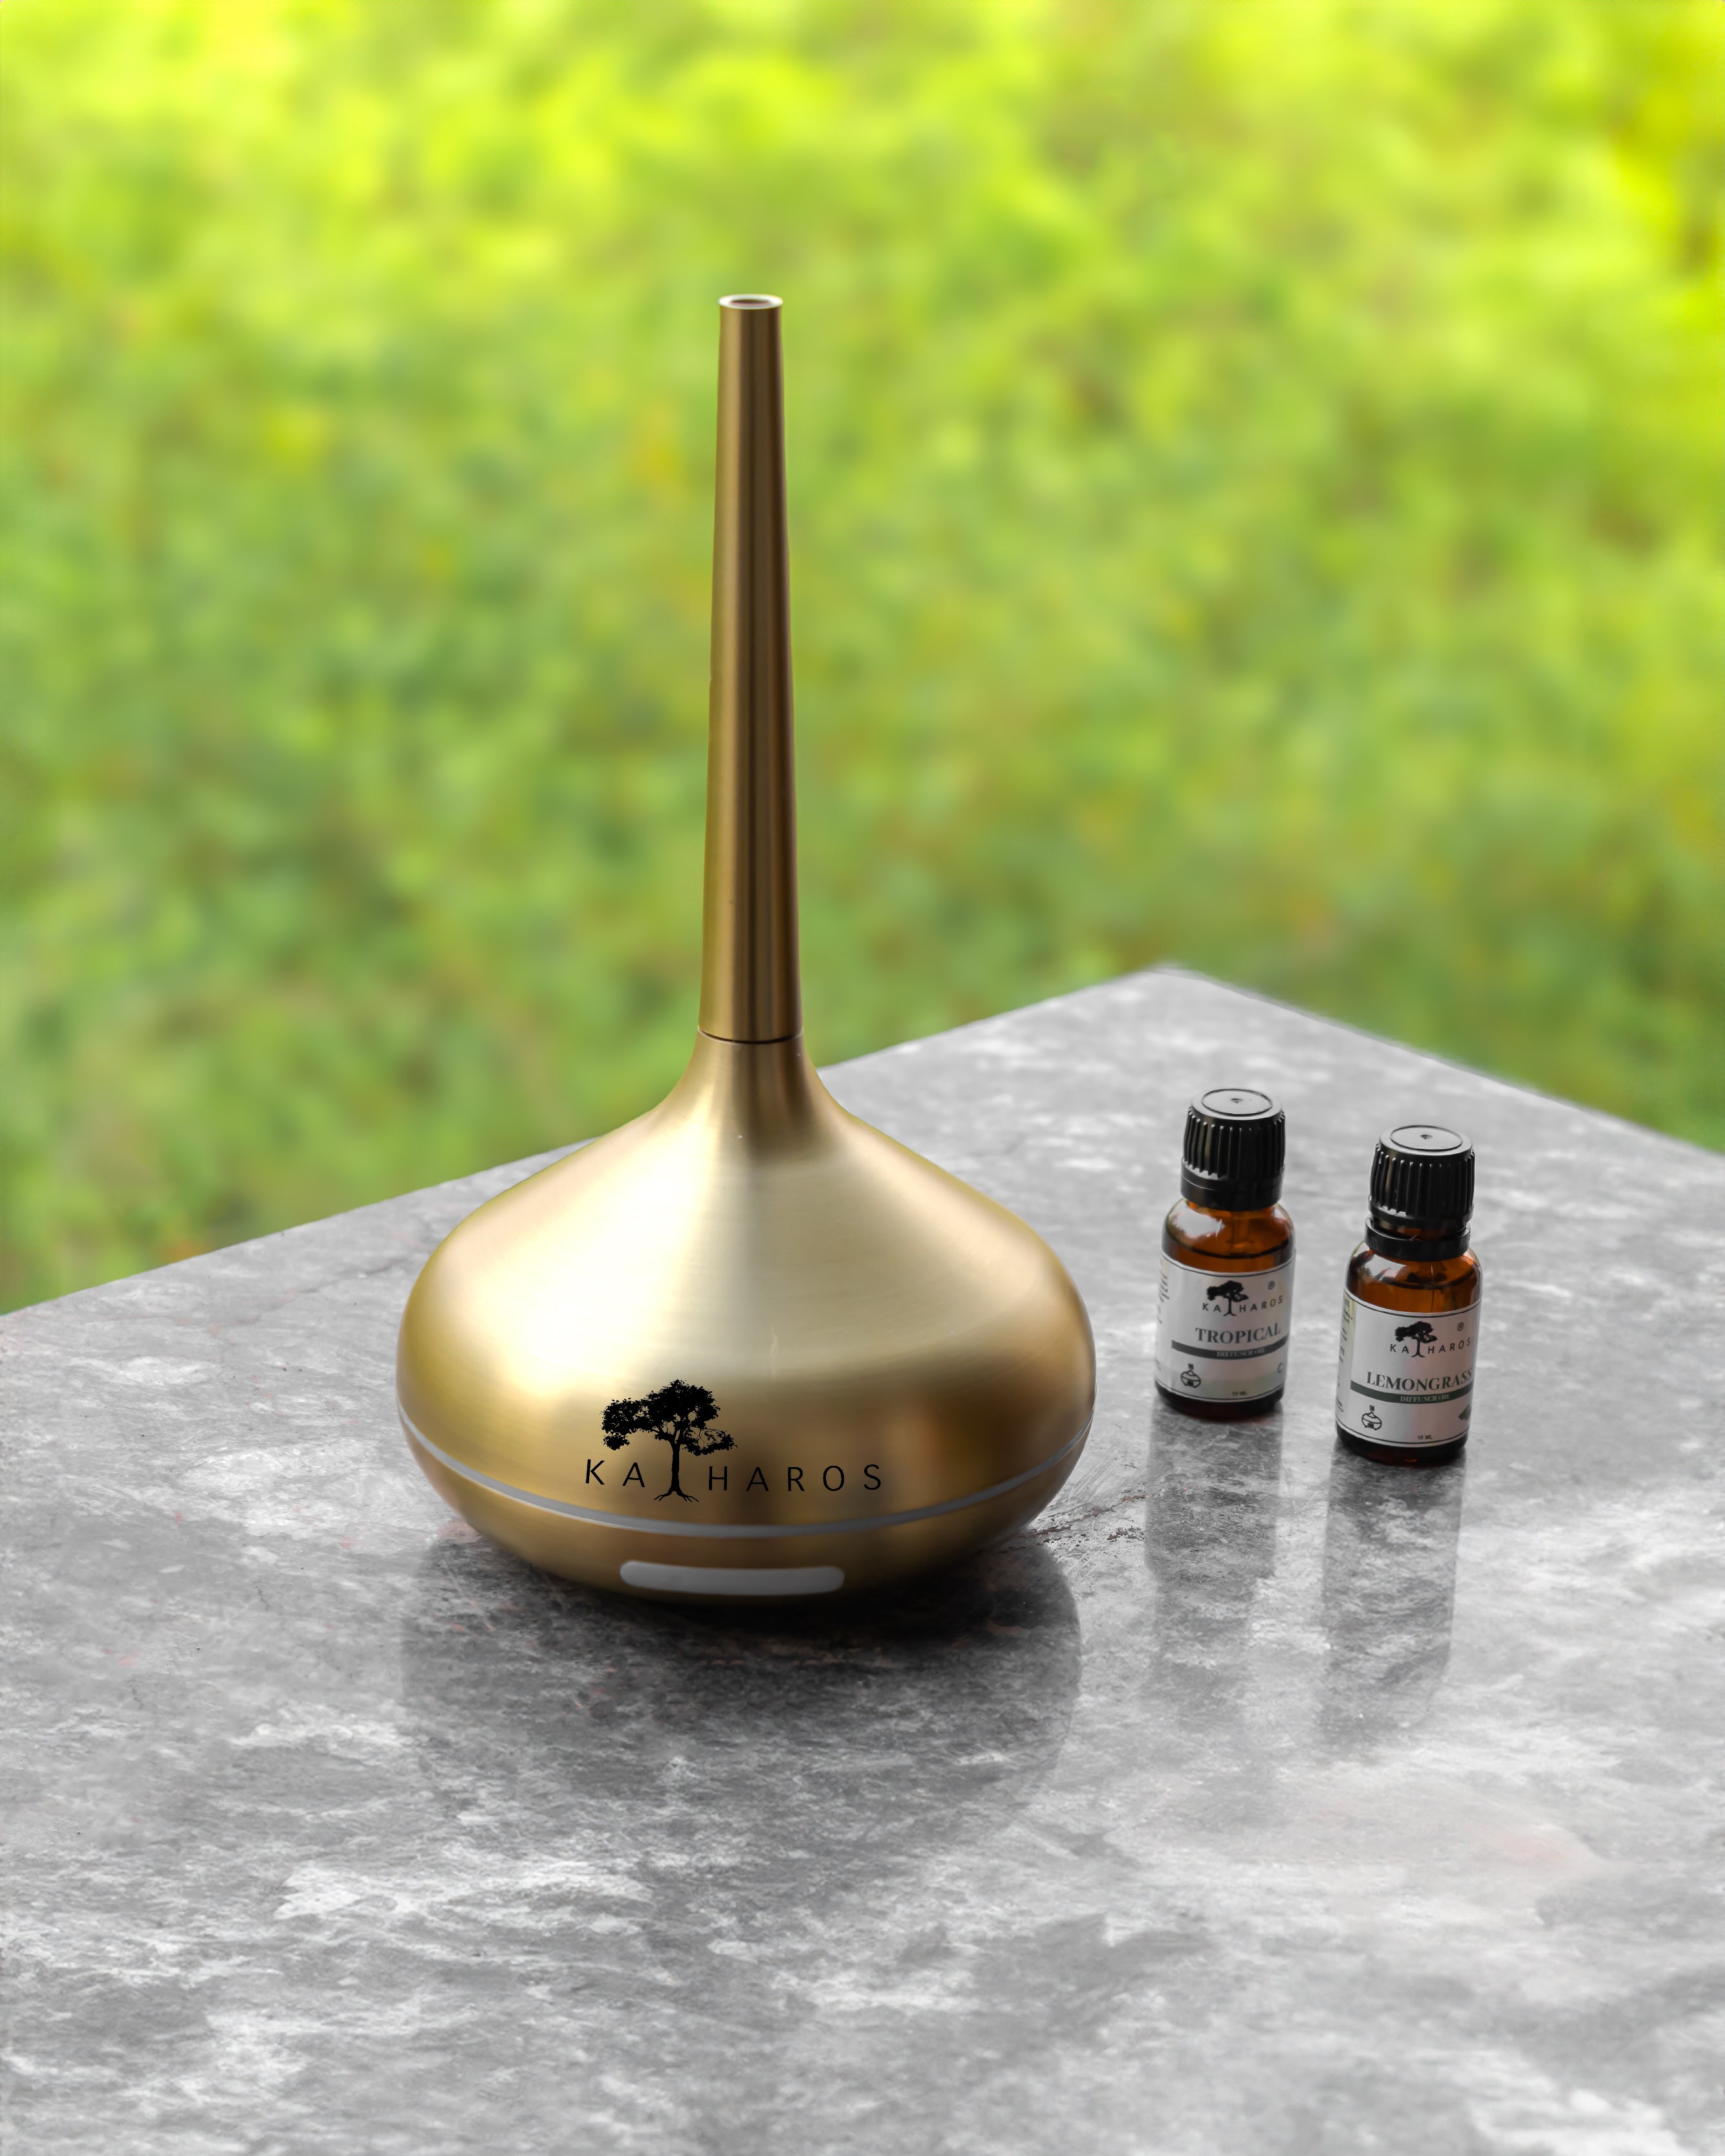 Katharos luxury golden finish humidifier + 2x complimentary fragrance oils 15 mL each